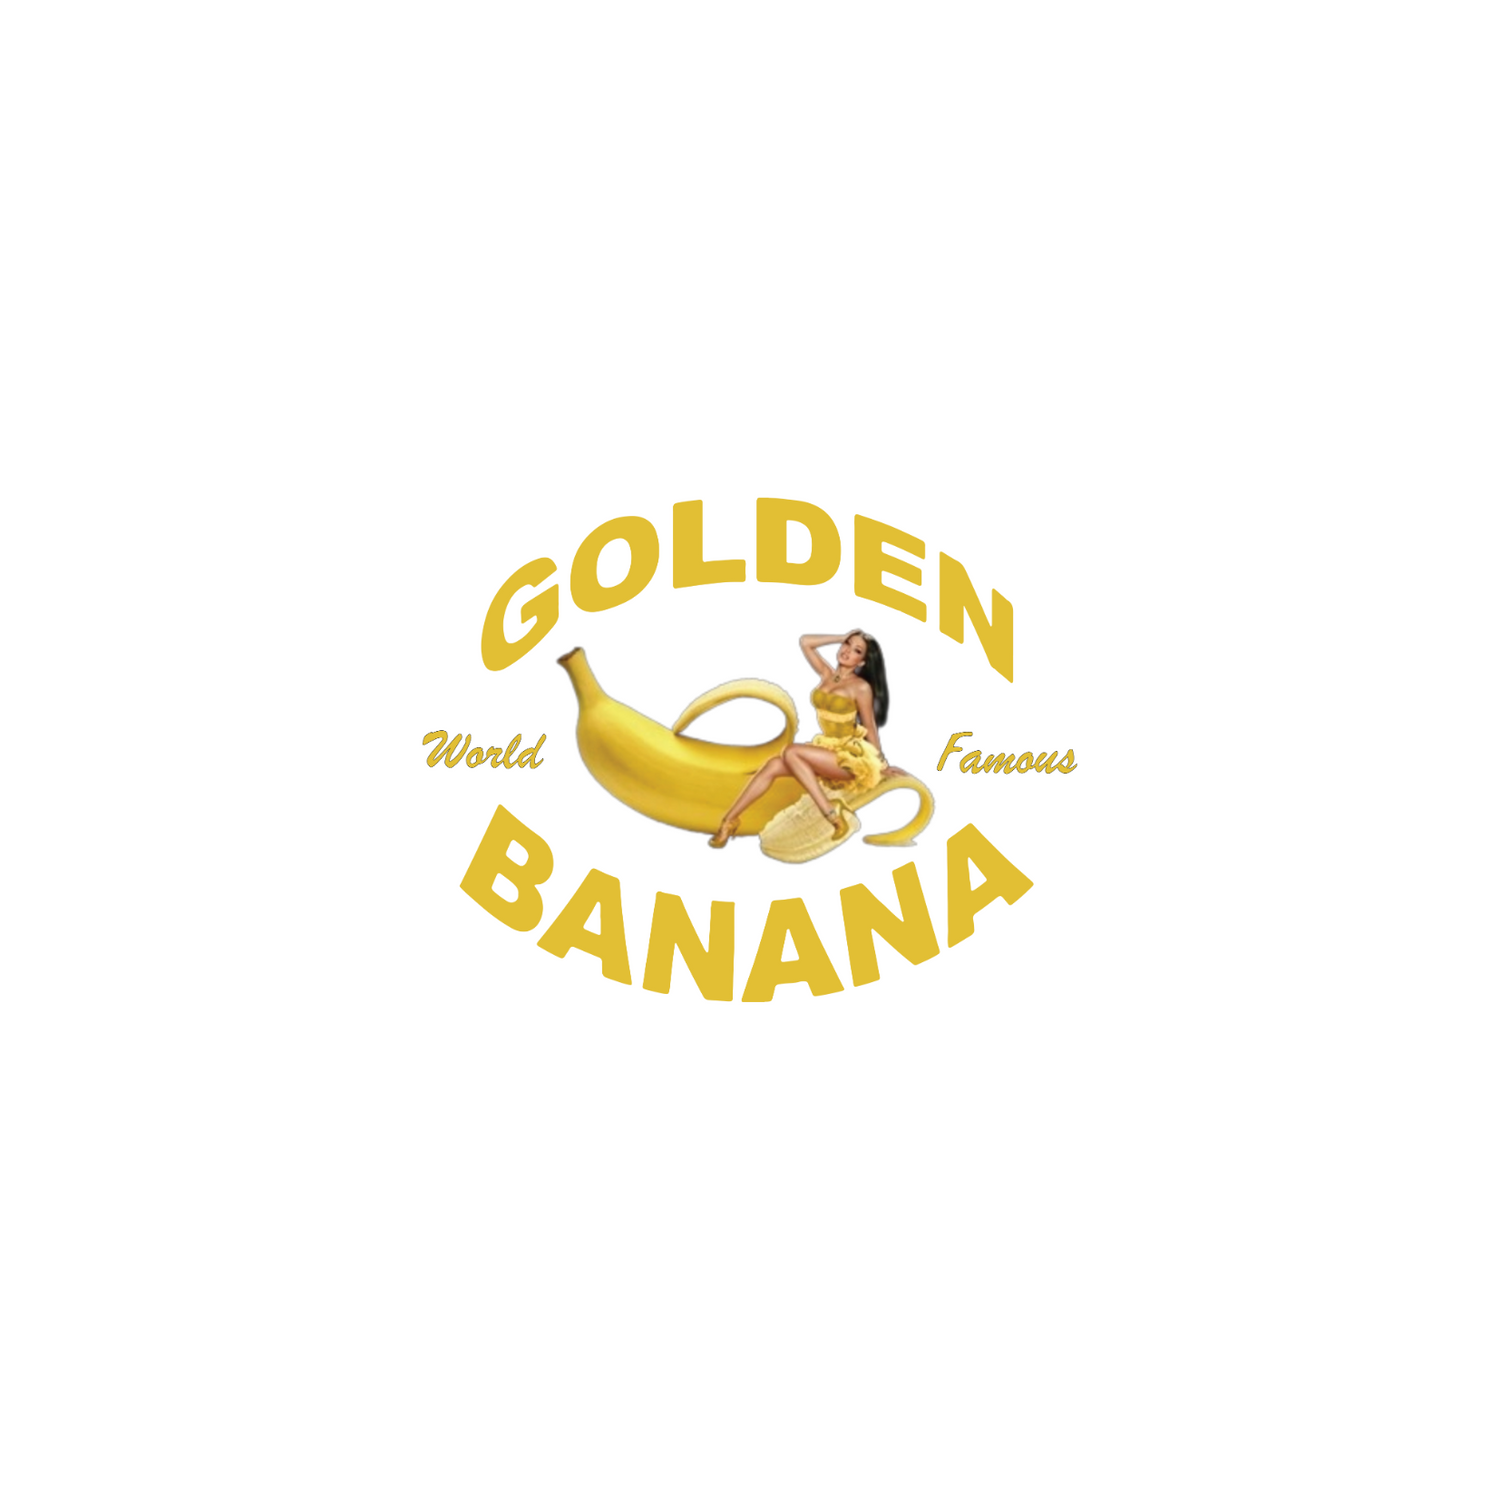 The Golden Banana